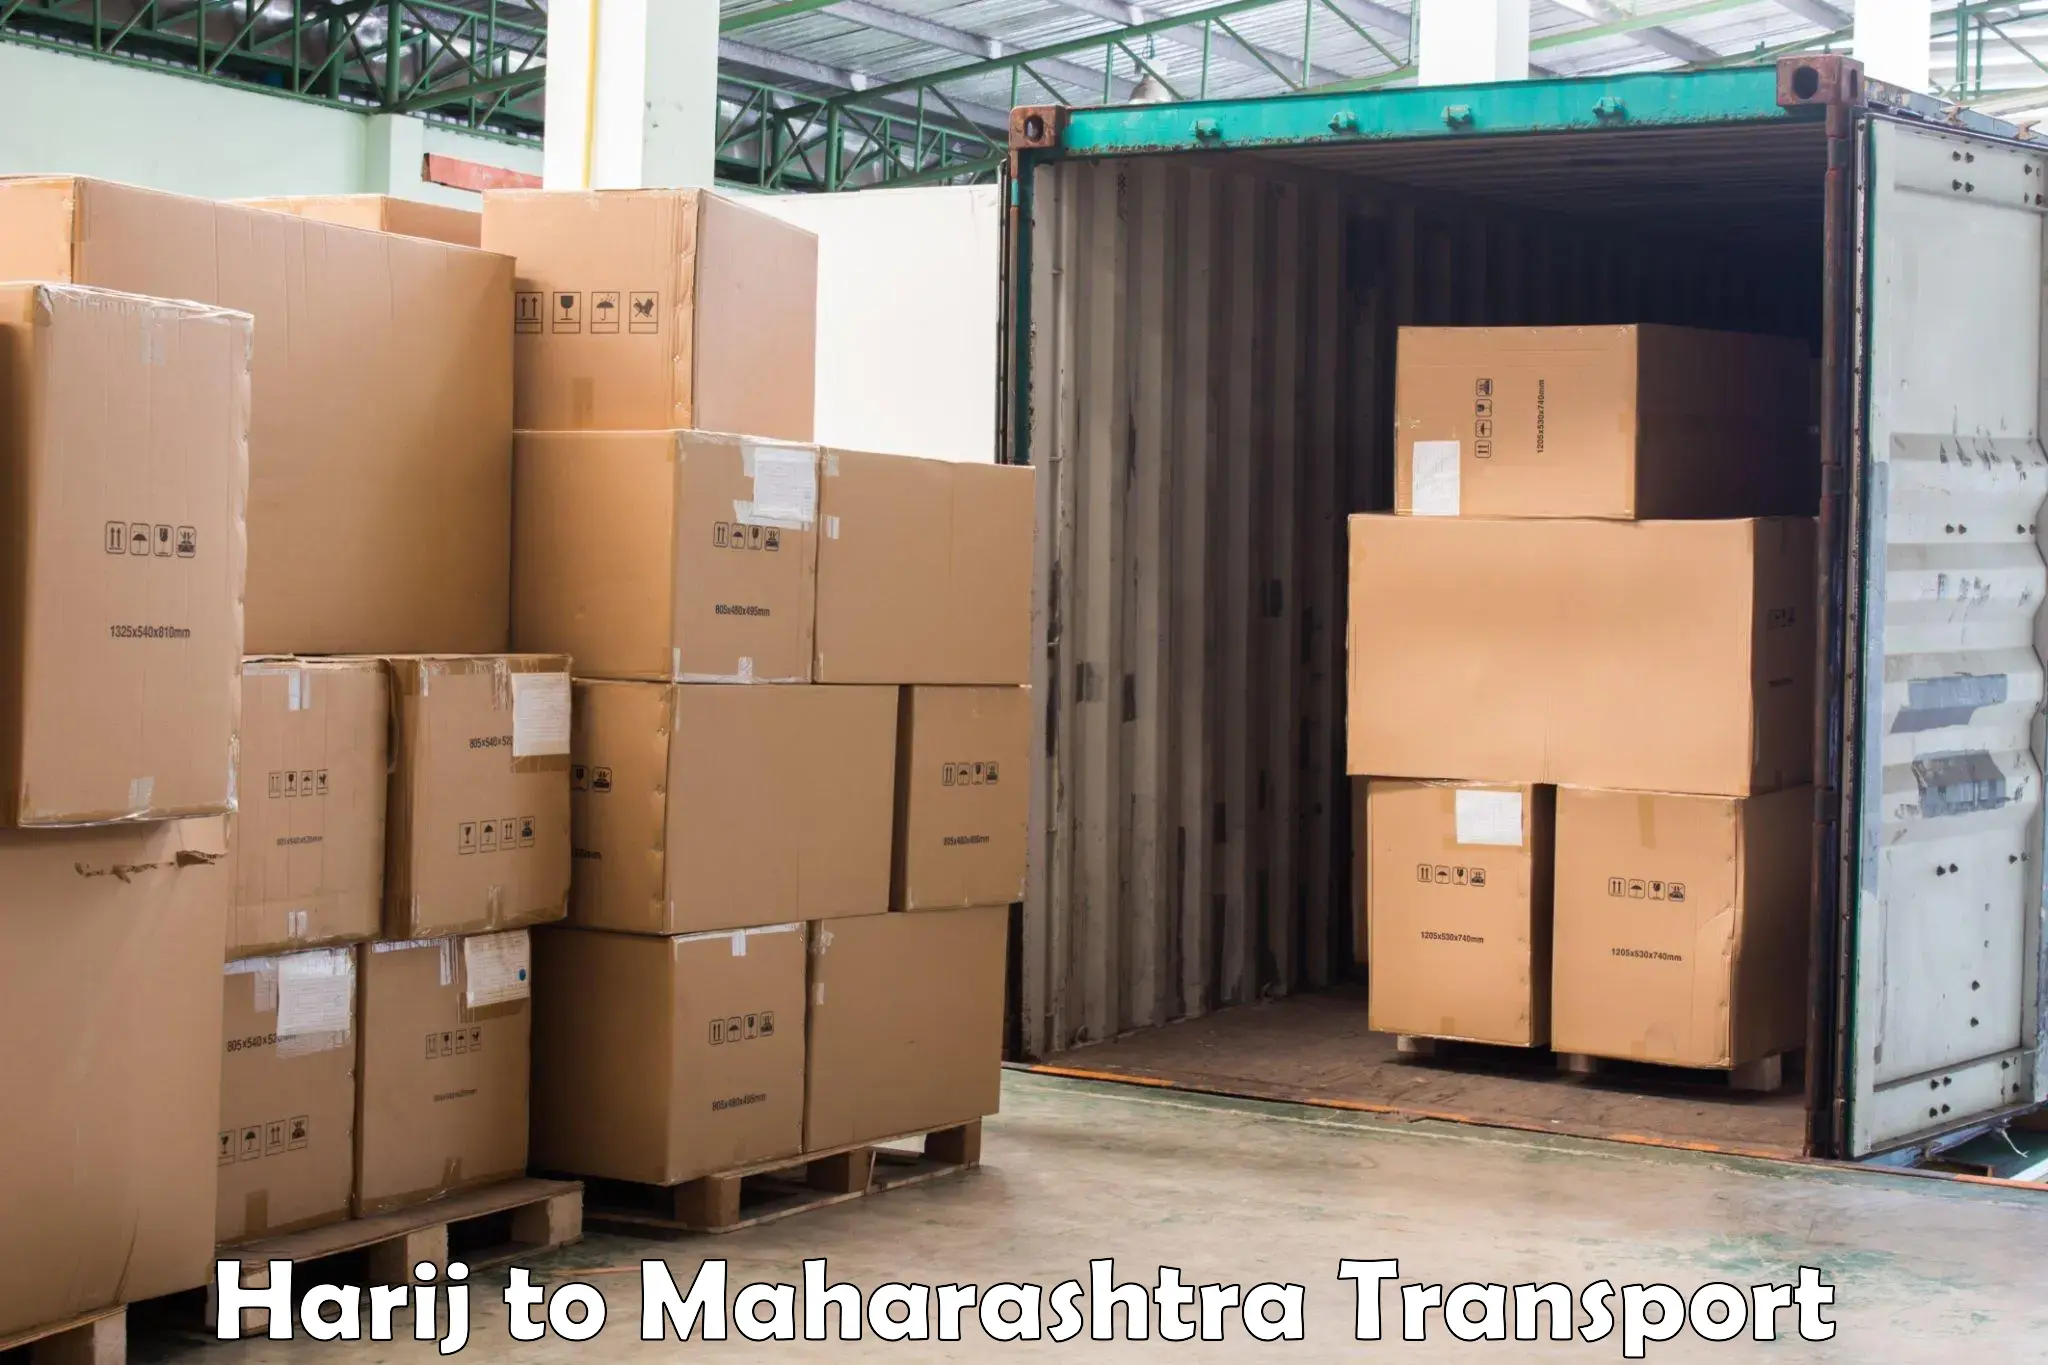 Truck transport companies in India Harij to Kolhapur